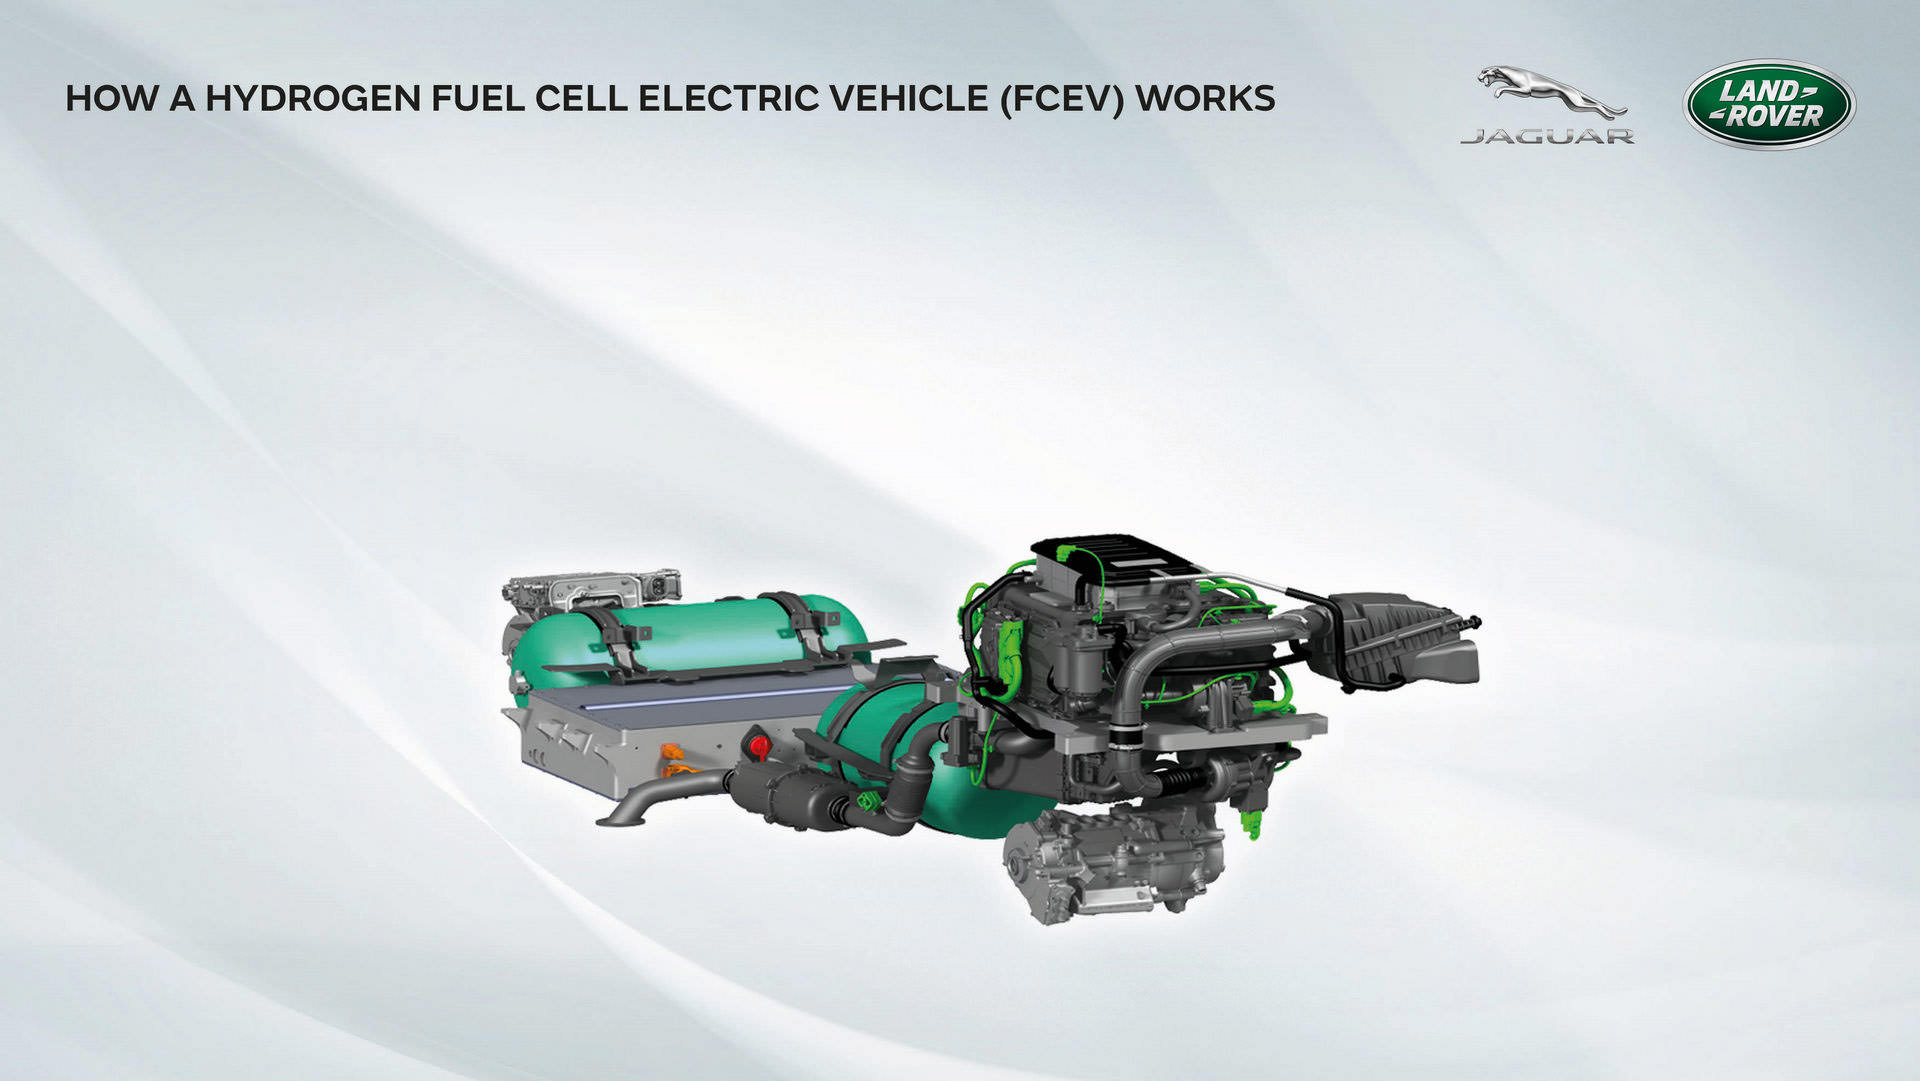 دیاگرام پیشرانه مفهومی لندرور دیفندر هیدروژنی / Hydrogen Land Rover Defender Concept